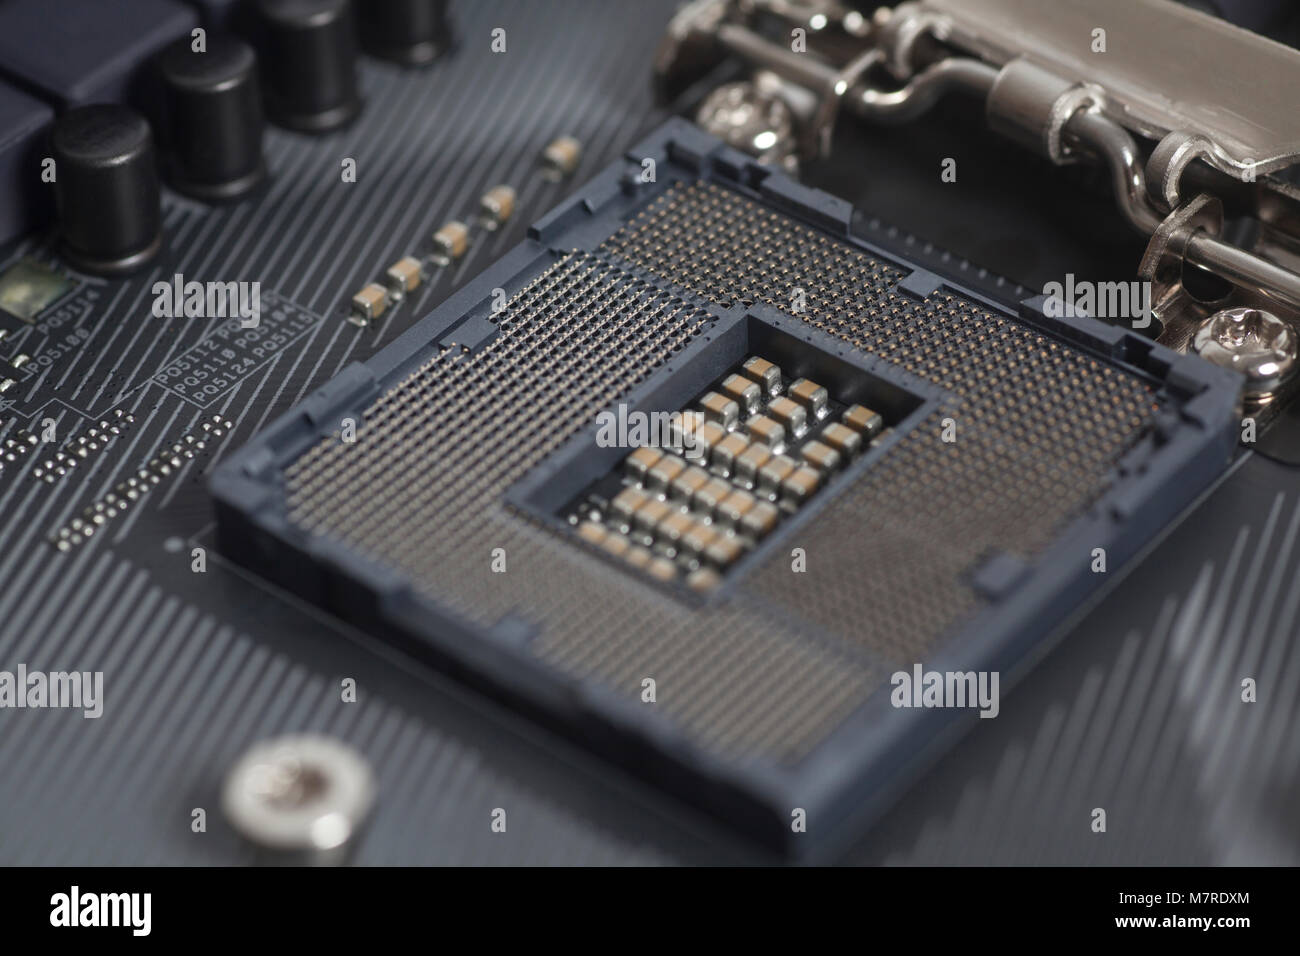 Intel LGA 1151 cpu socket on motherboard Computer PC close up Stock Photo -  Alamy